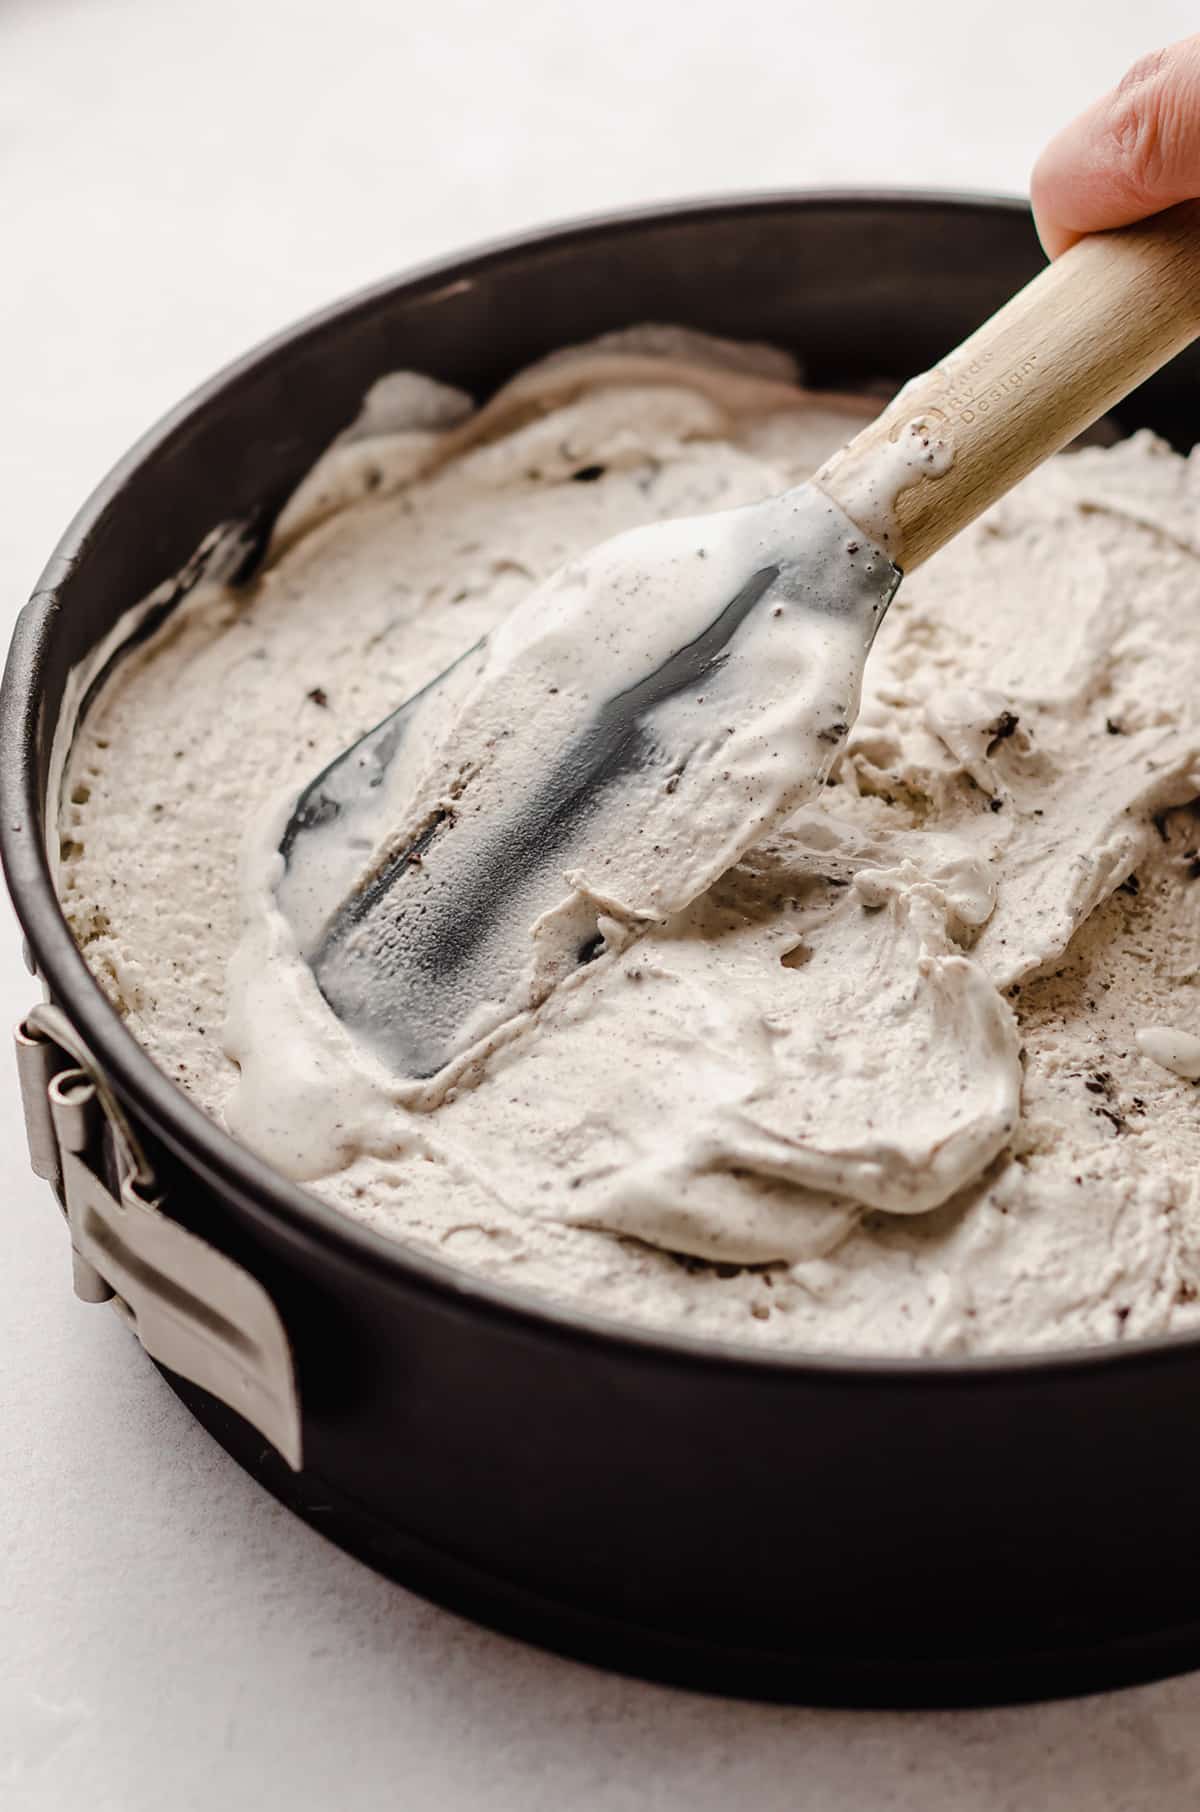 Smoothing ice cream into a springform pan.